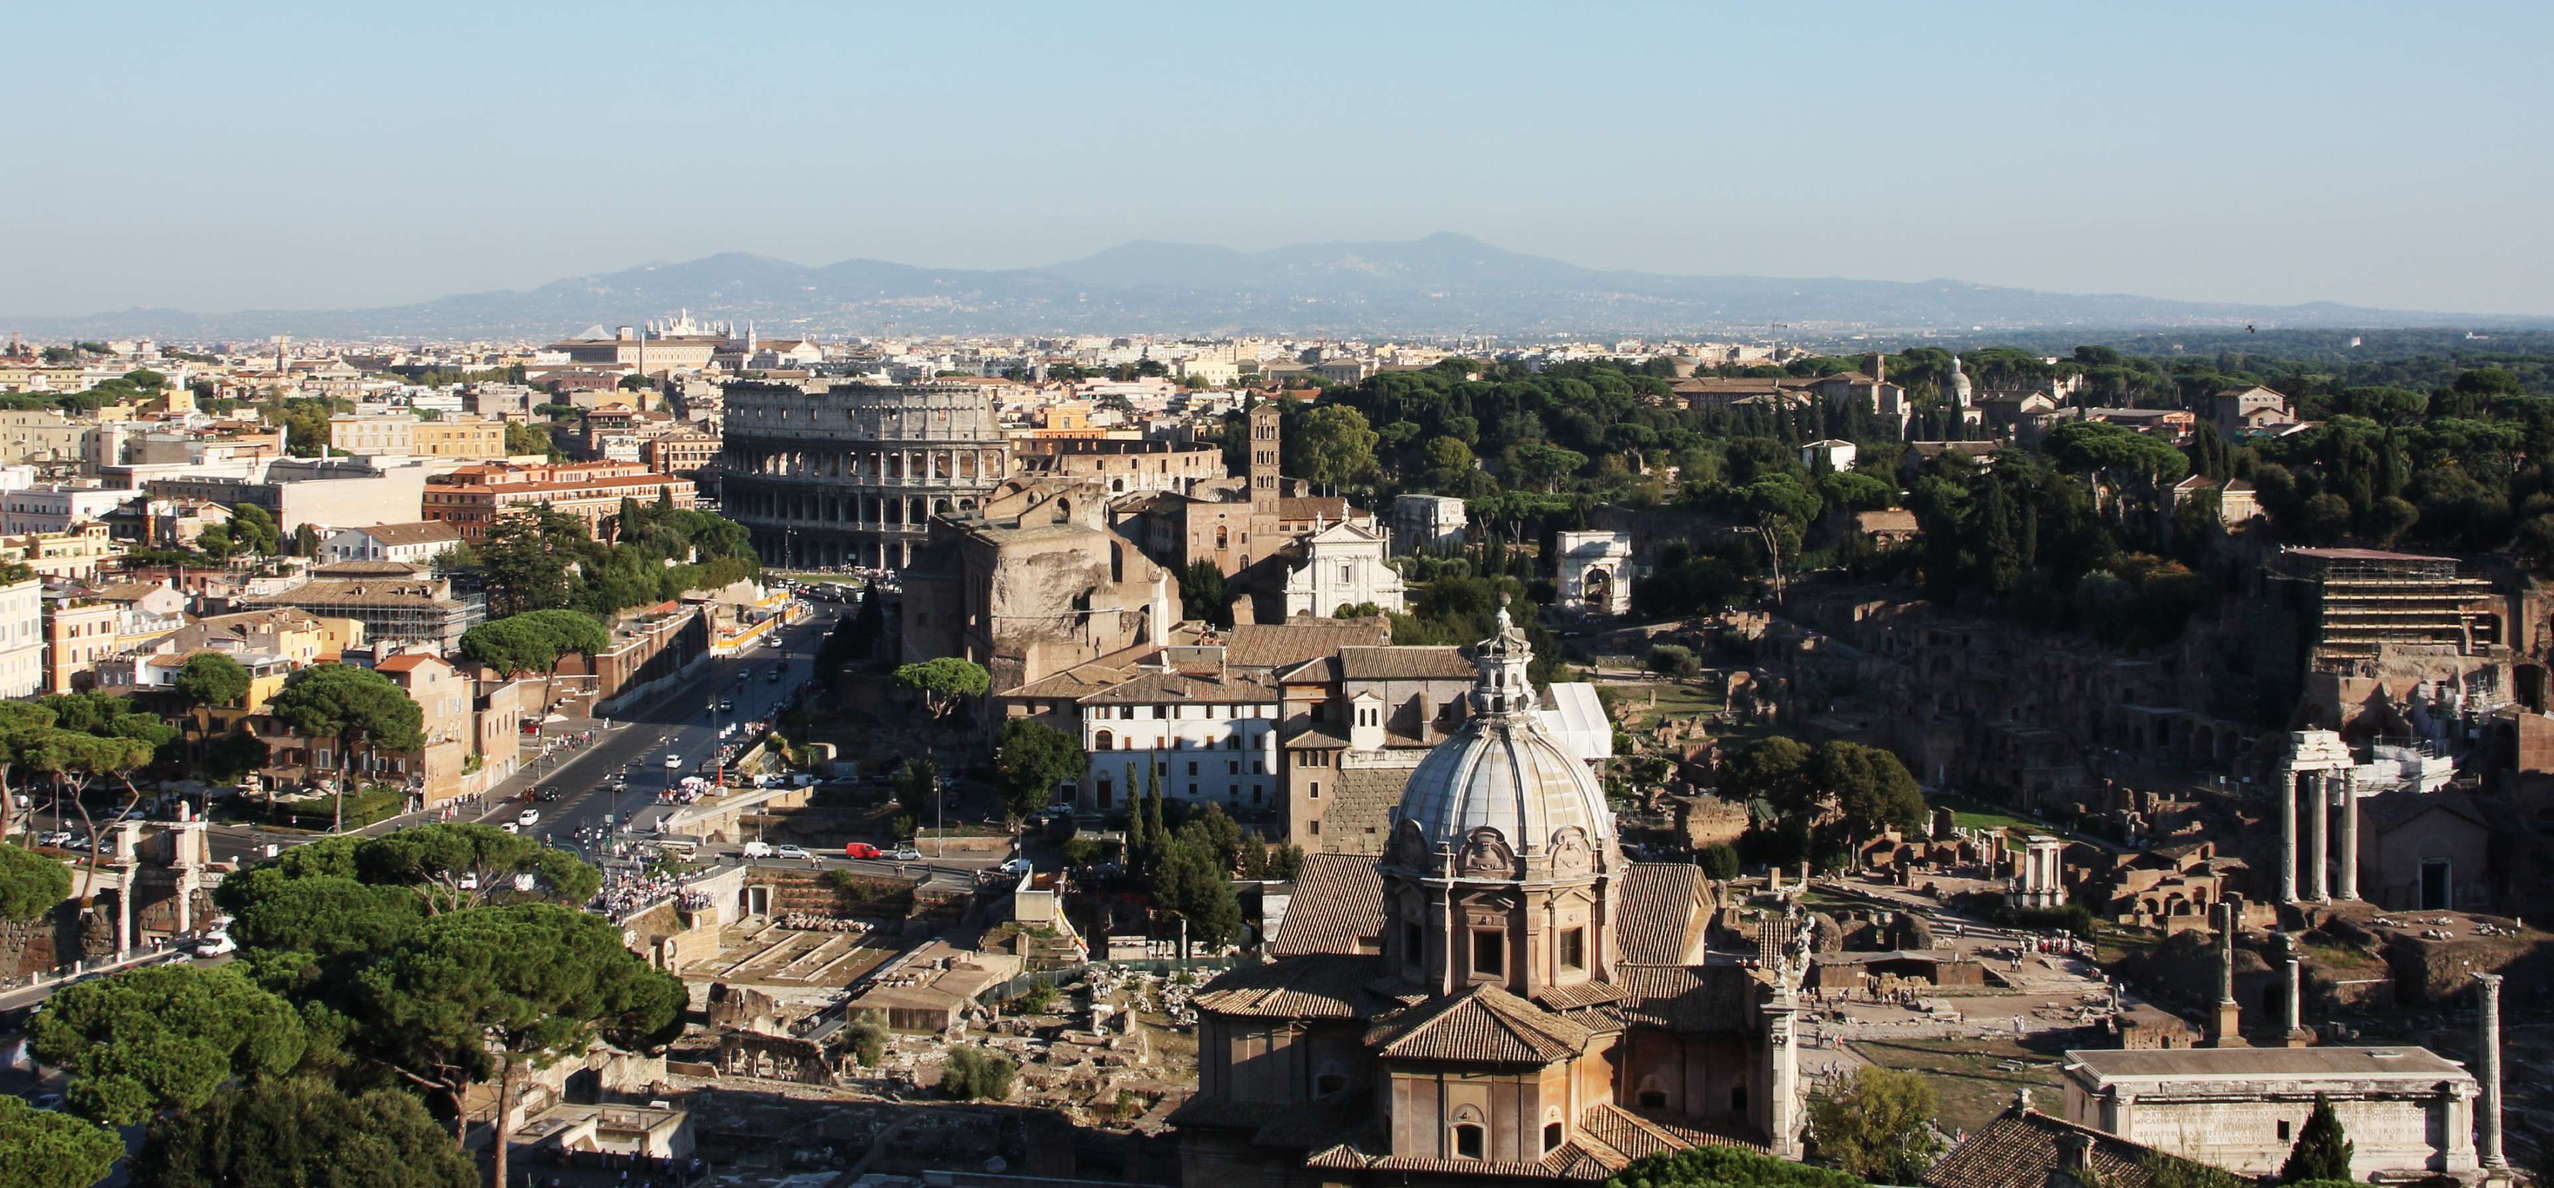 Roma | Foro Romano and Colosseo